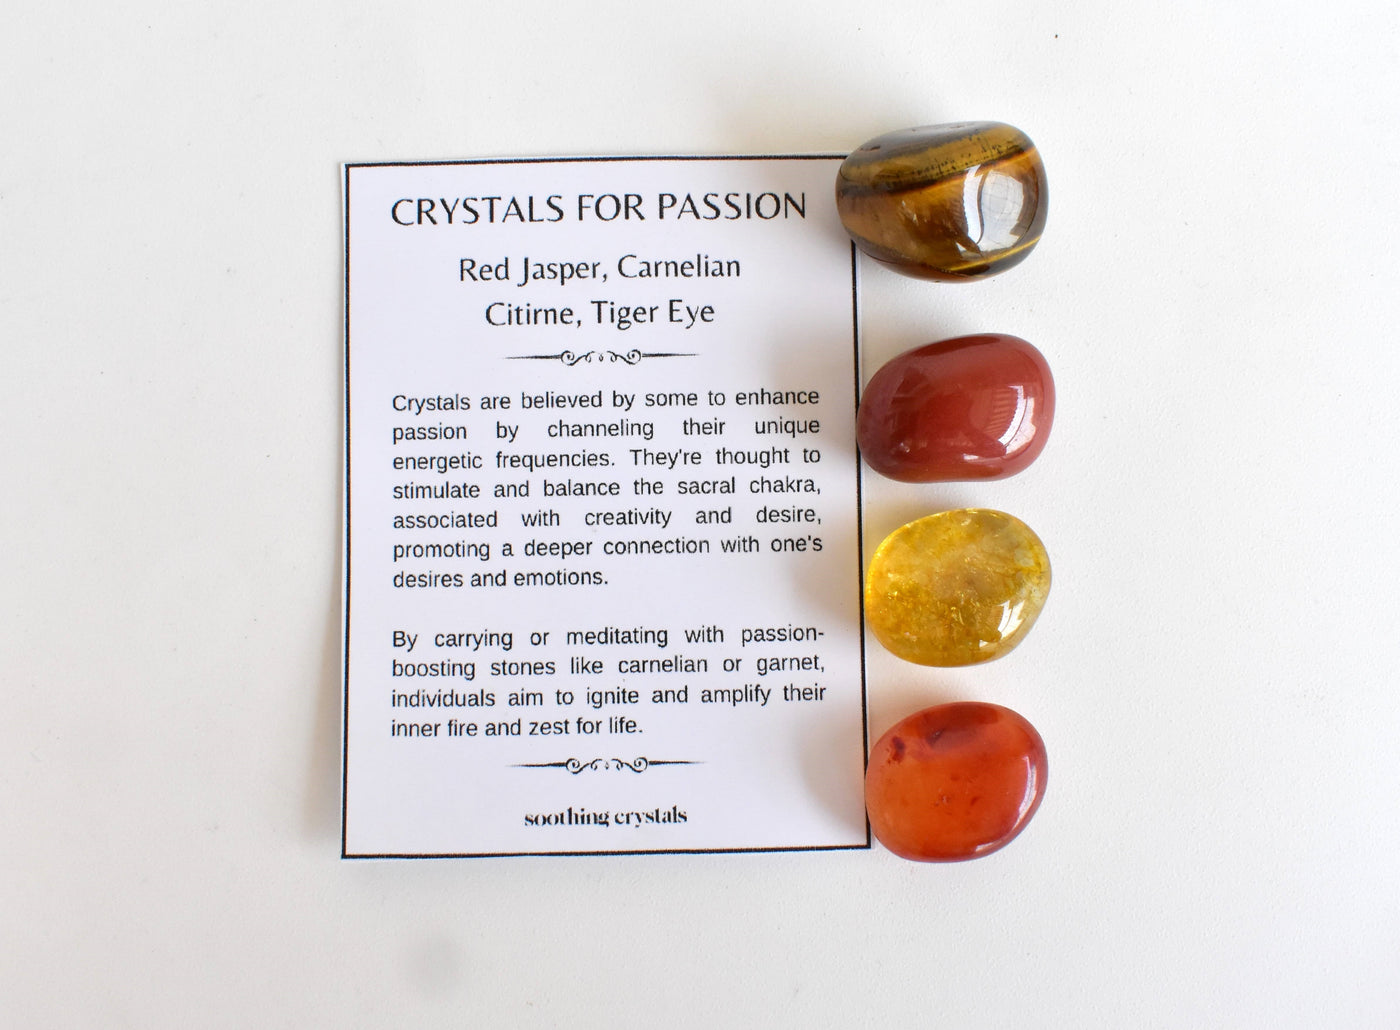 Enhances PASSION Crystal Kit, Gemstone Tumble Kit, Passion Crystal Gift Set